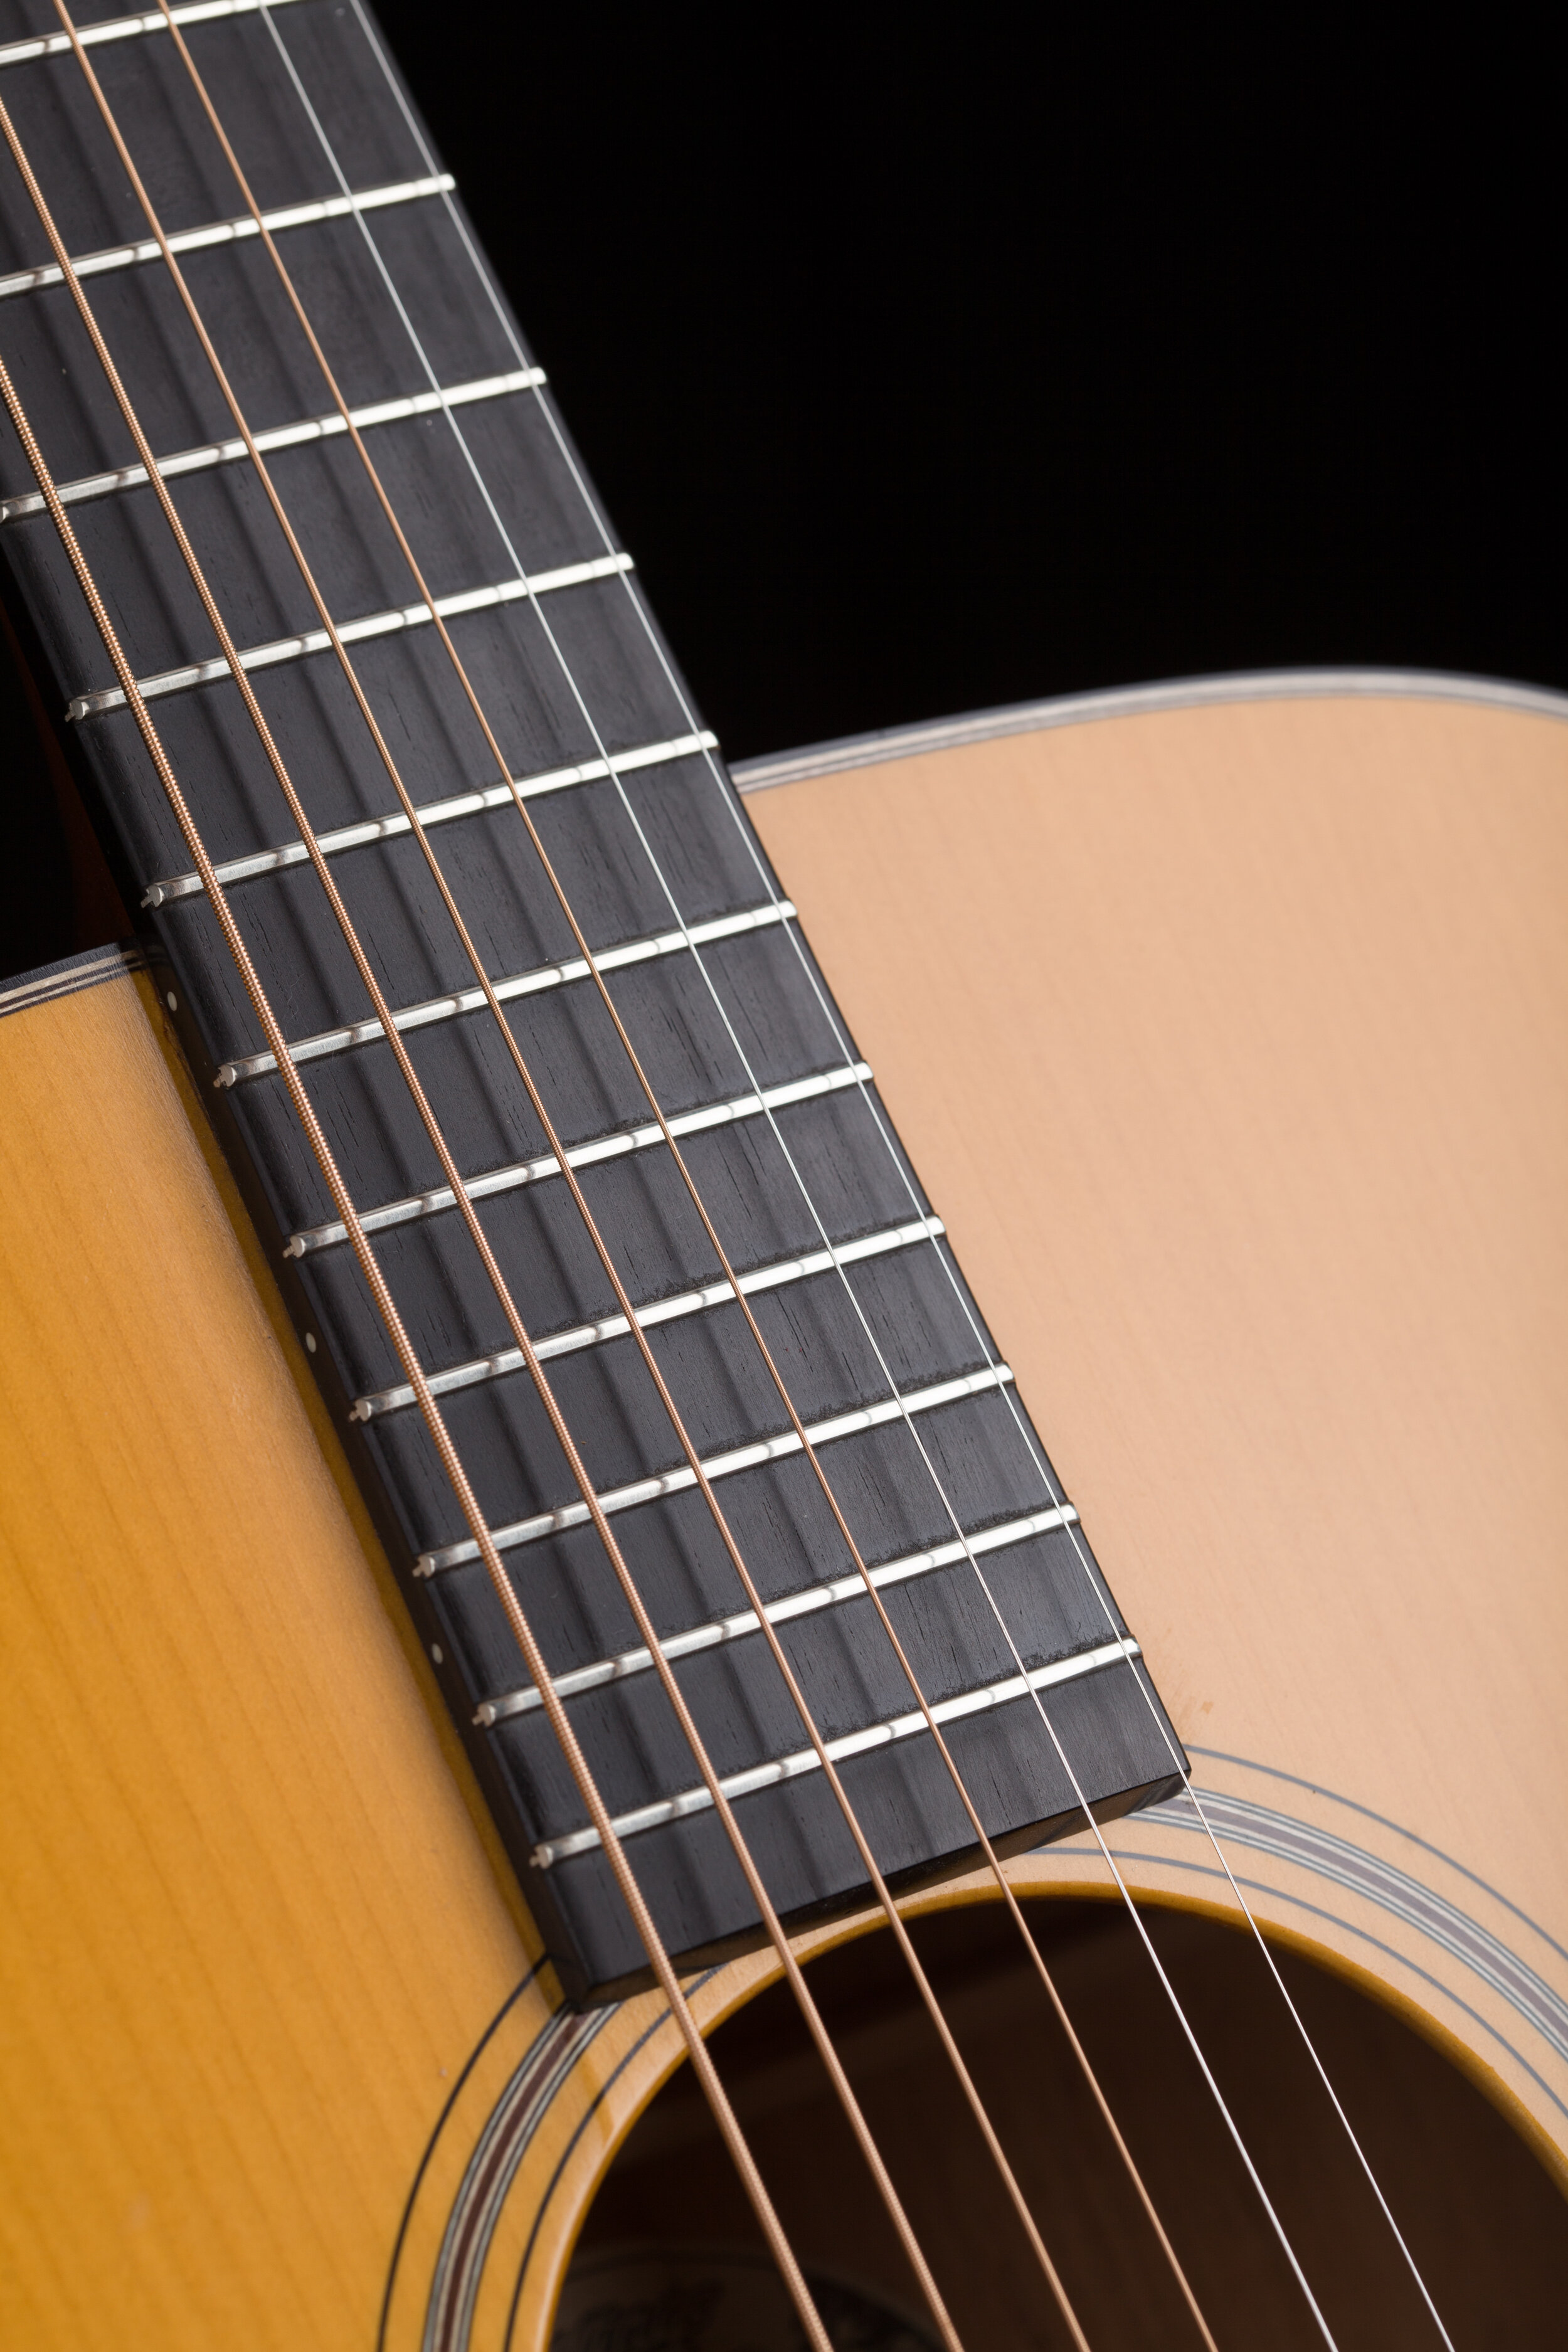 Collings gitarre - Die qualitativsten Collings gitarre im Vergleich